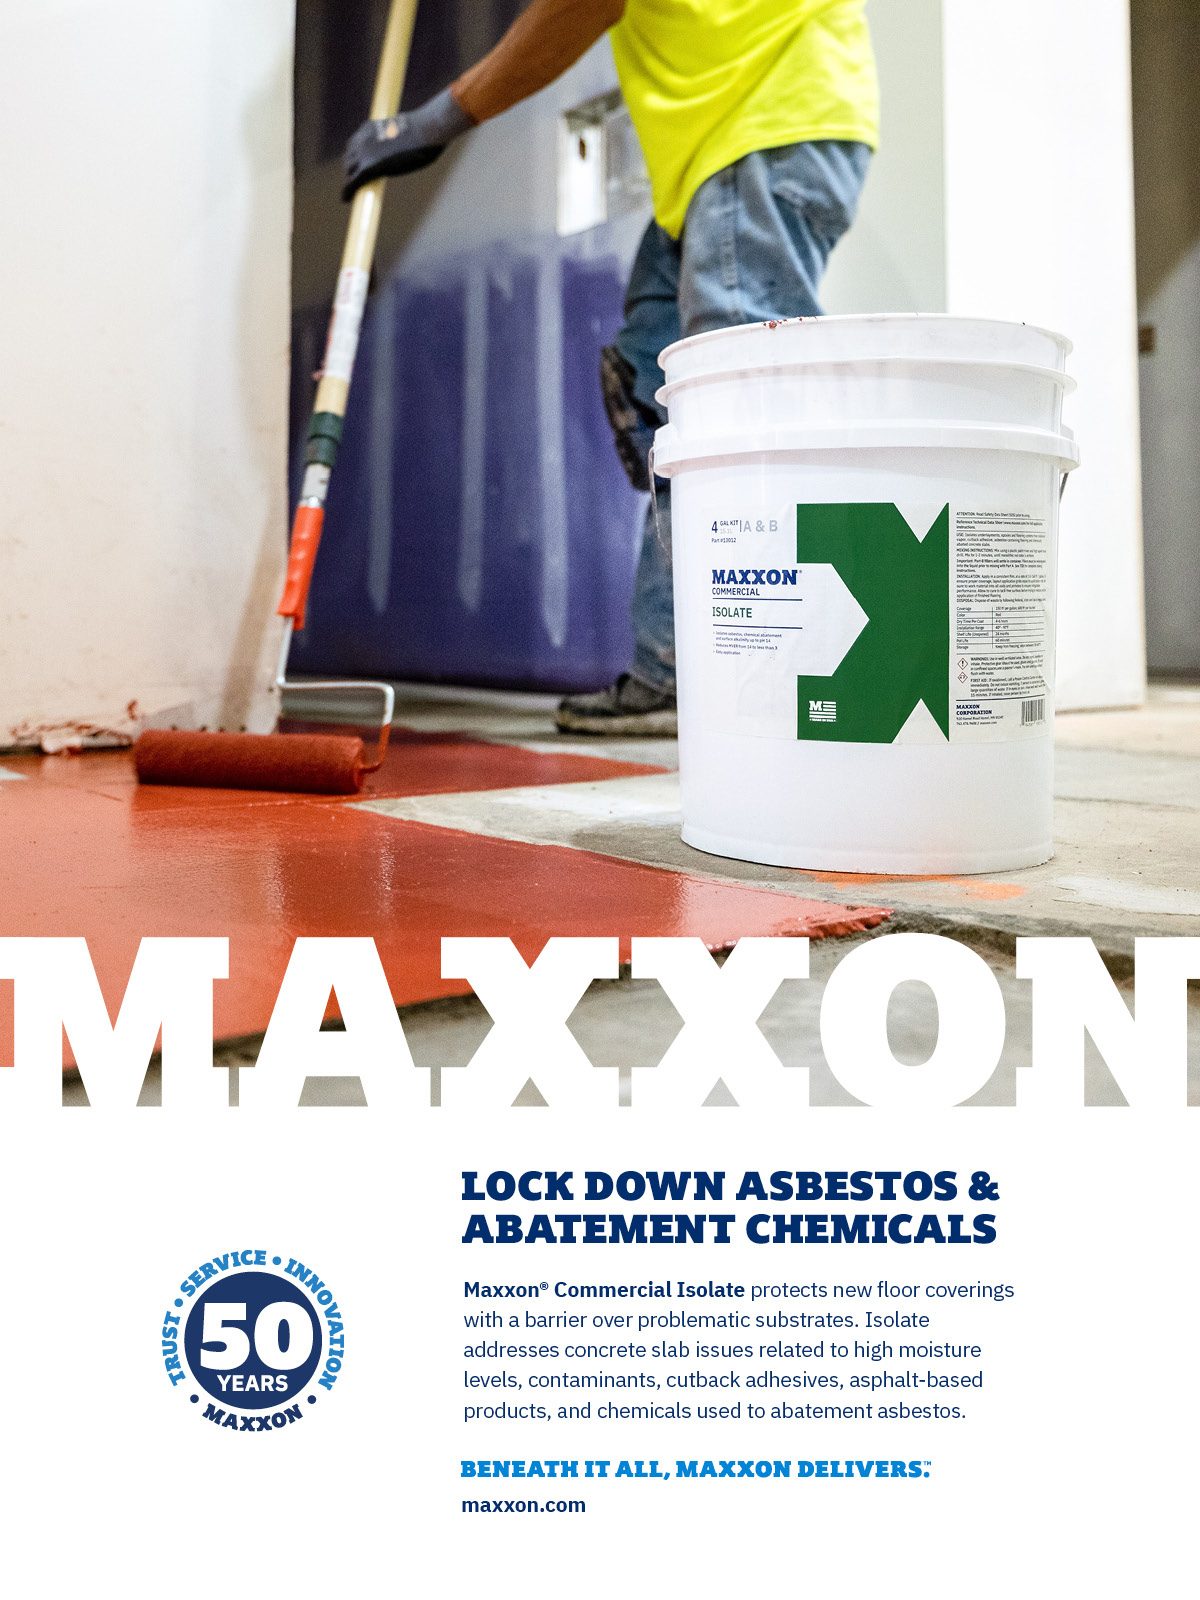 Maxxon Corp., Maxxon, Isolate